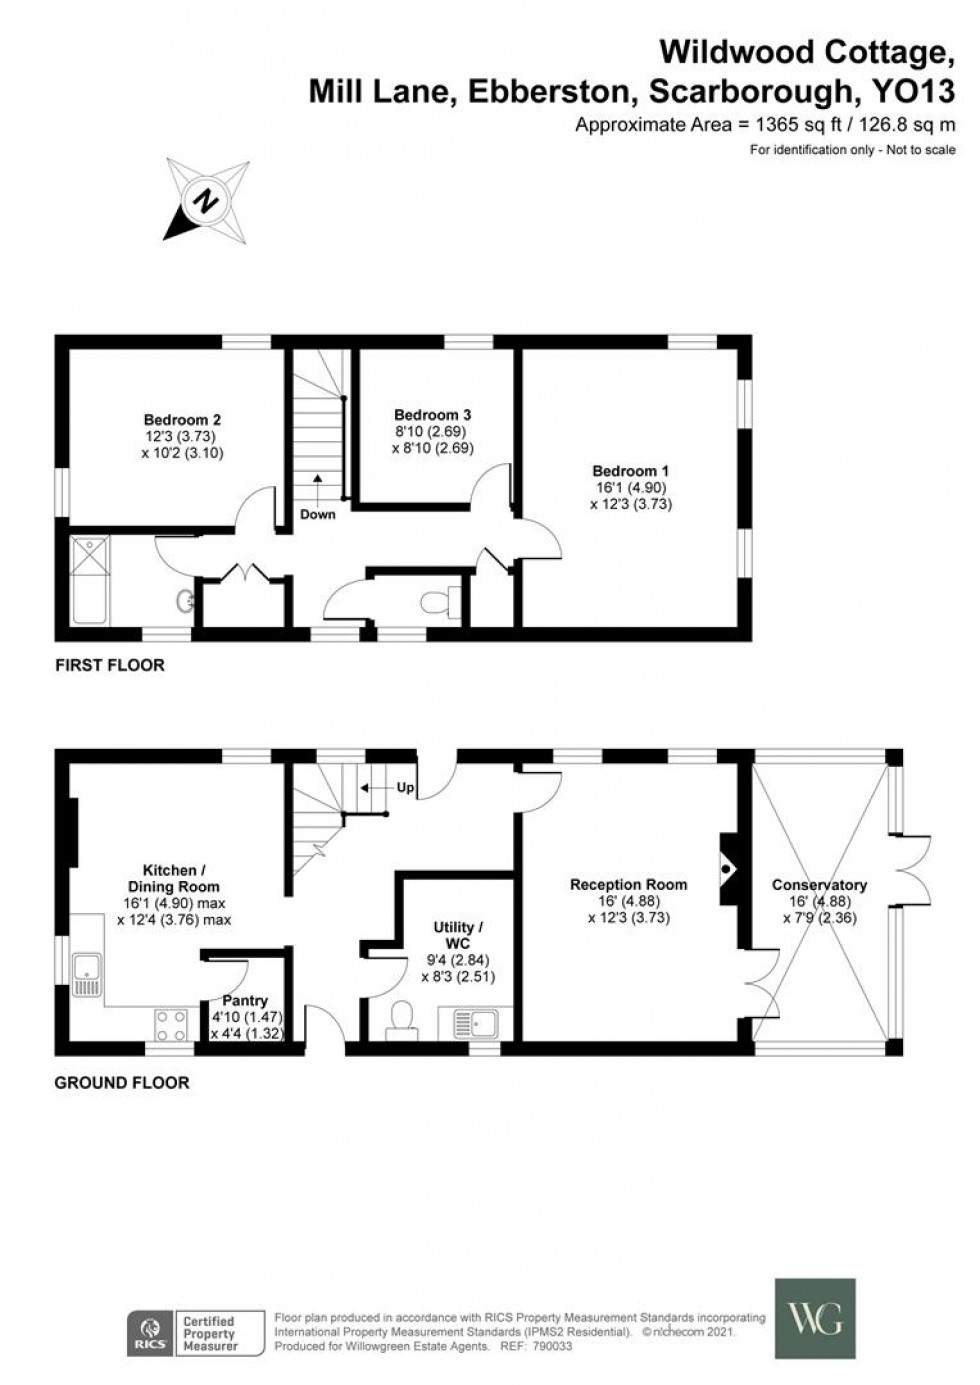 Floorplan for Wildwood Cottage, Mill Lane, Ebberston, Scarborough, North Yorkshire, YO13 9NL